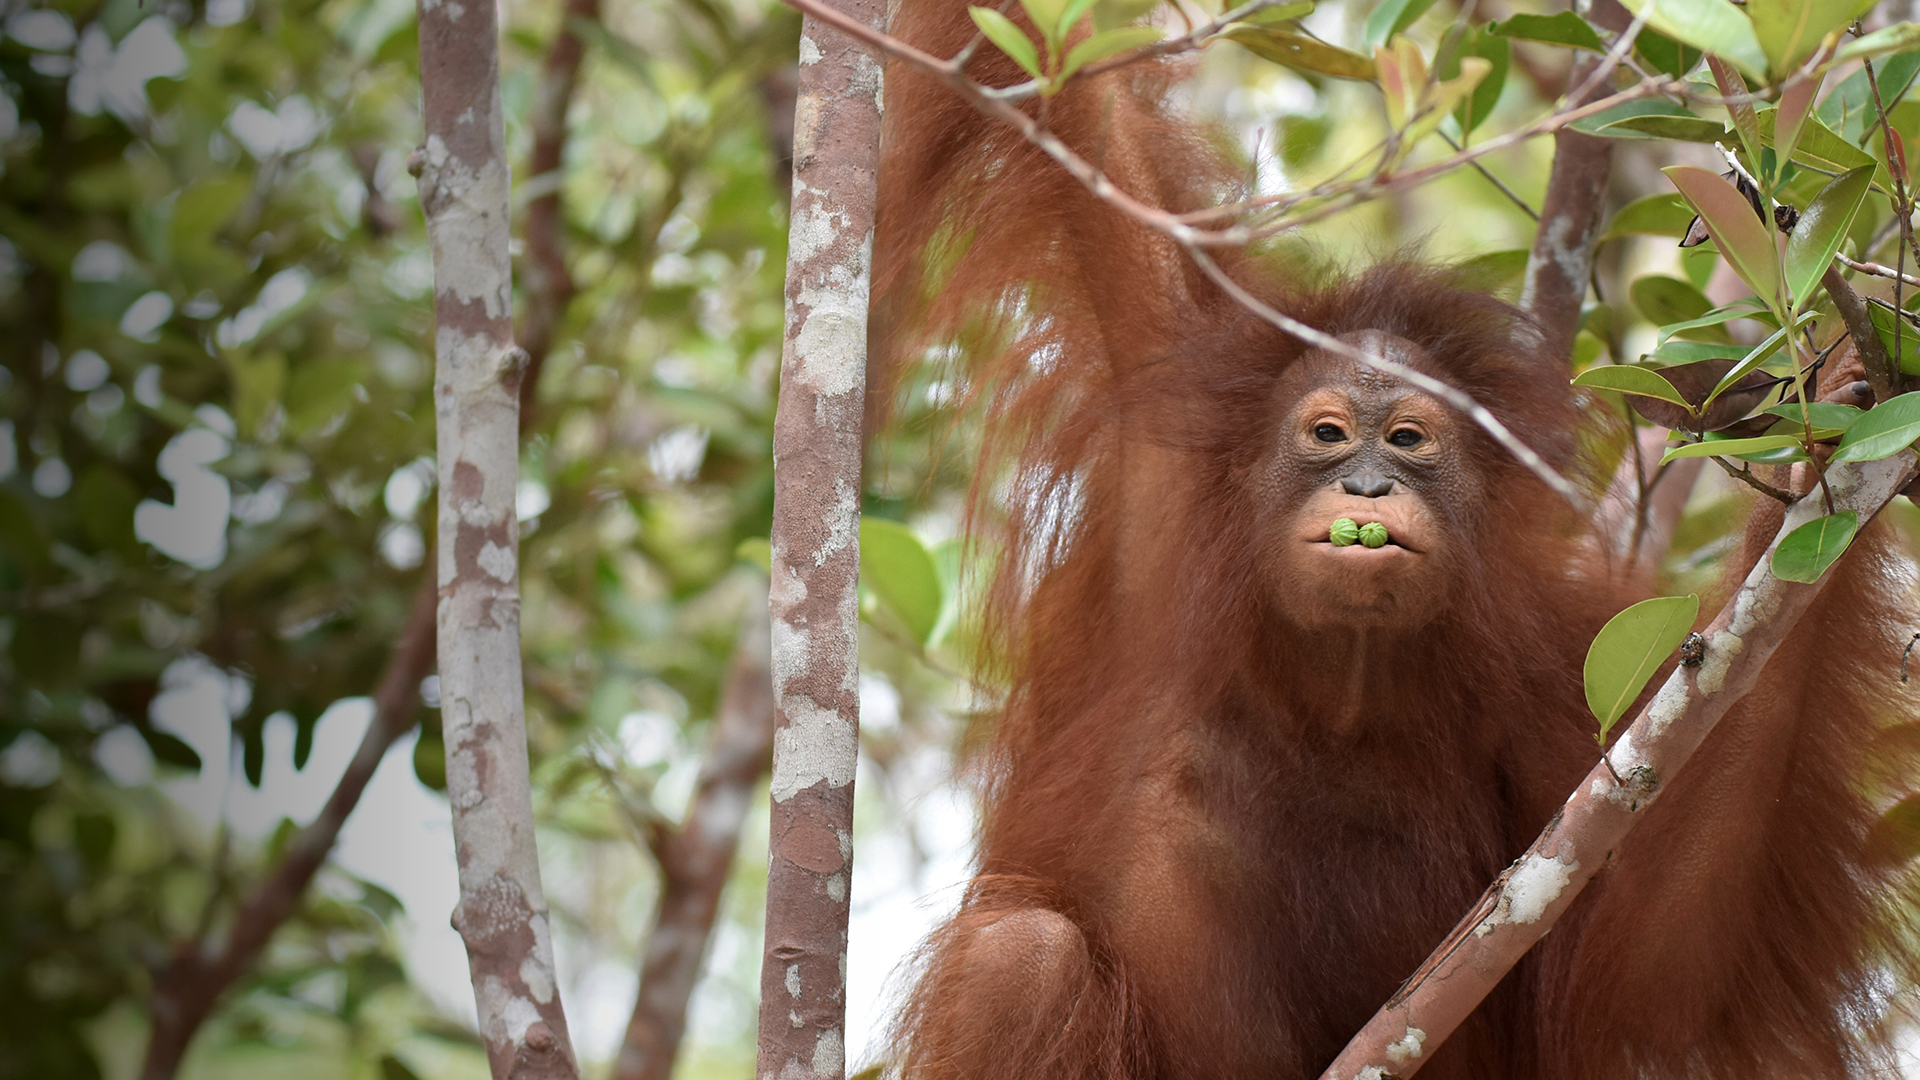 Timtom the orangutan eating berries